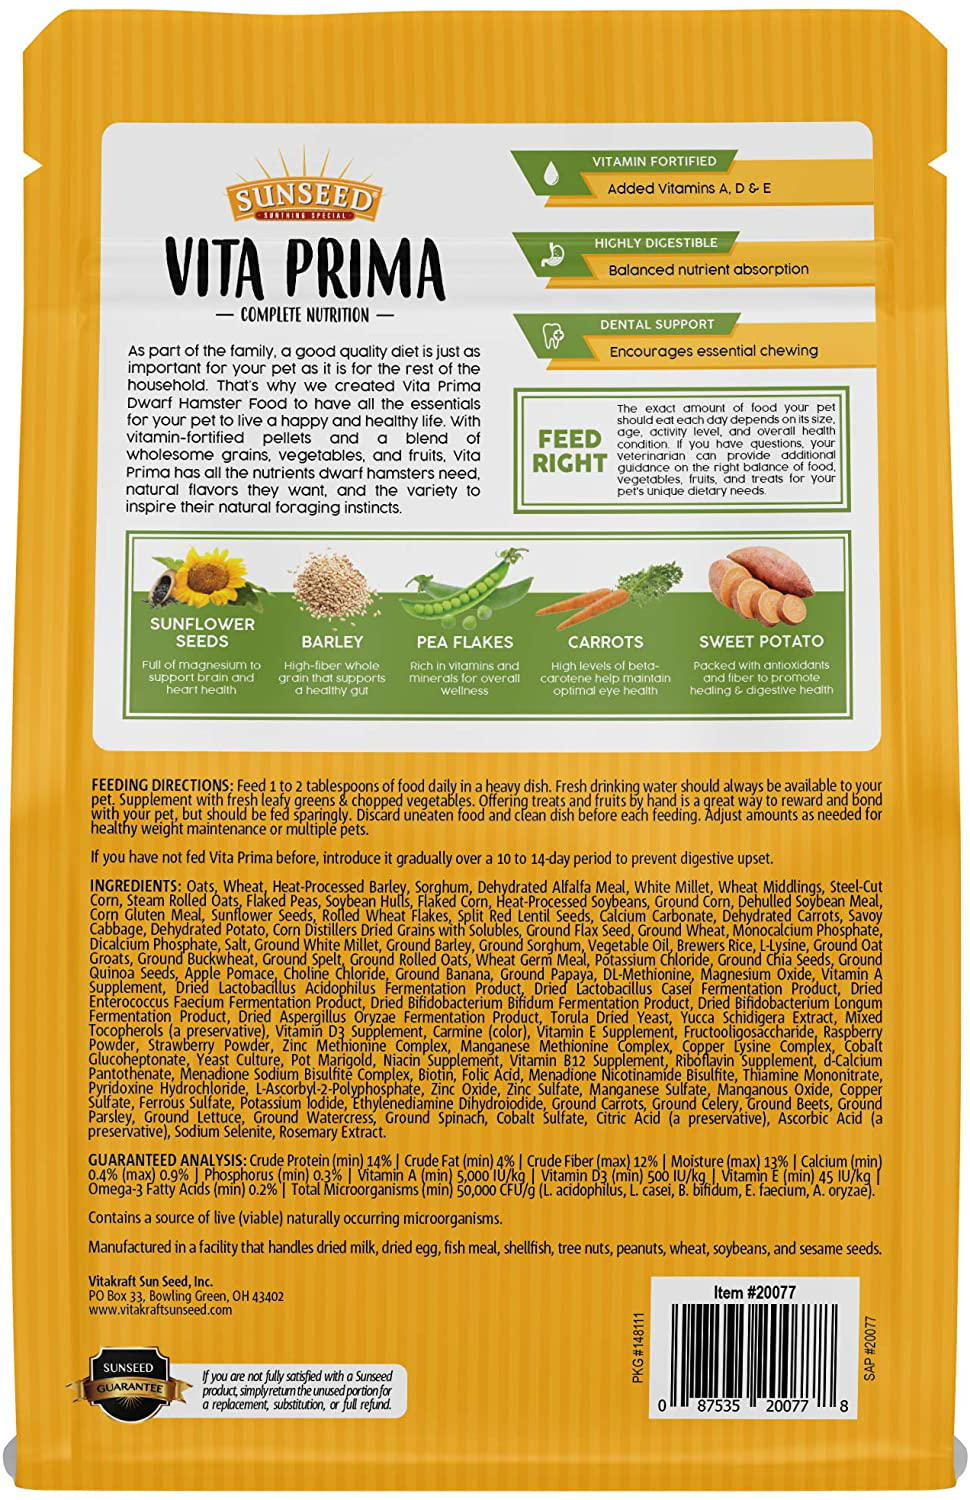 Sun Seed Vita Prima Dwarf Hamster Food